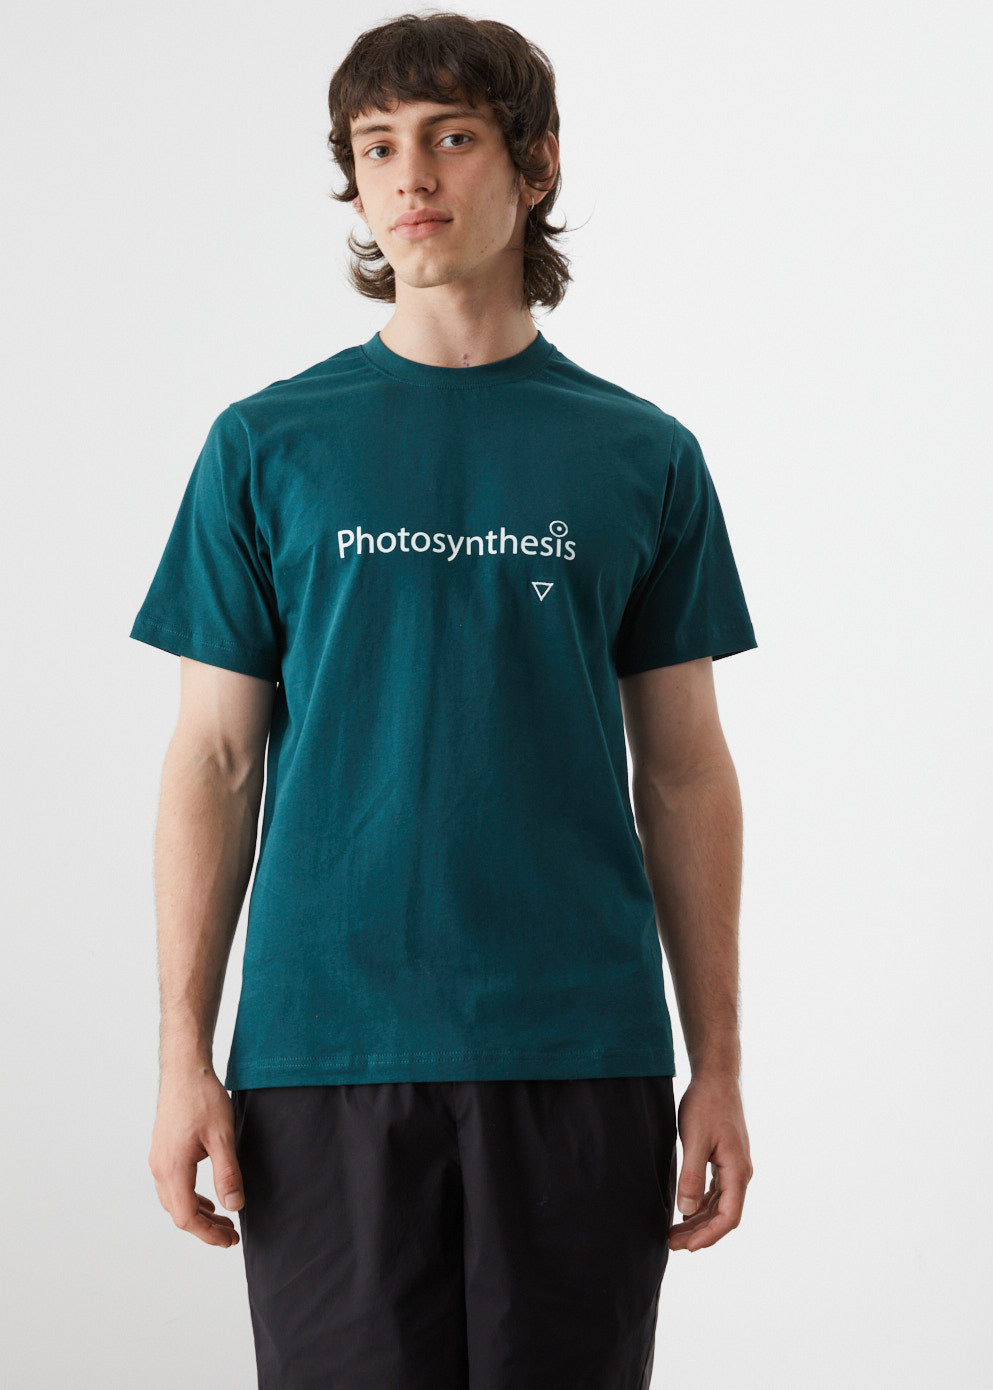 Photosynthesis T-Shirt